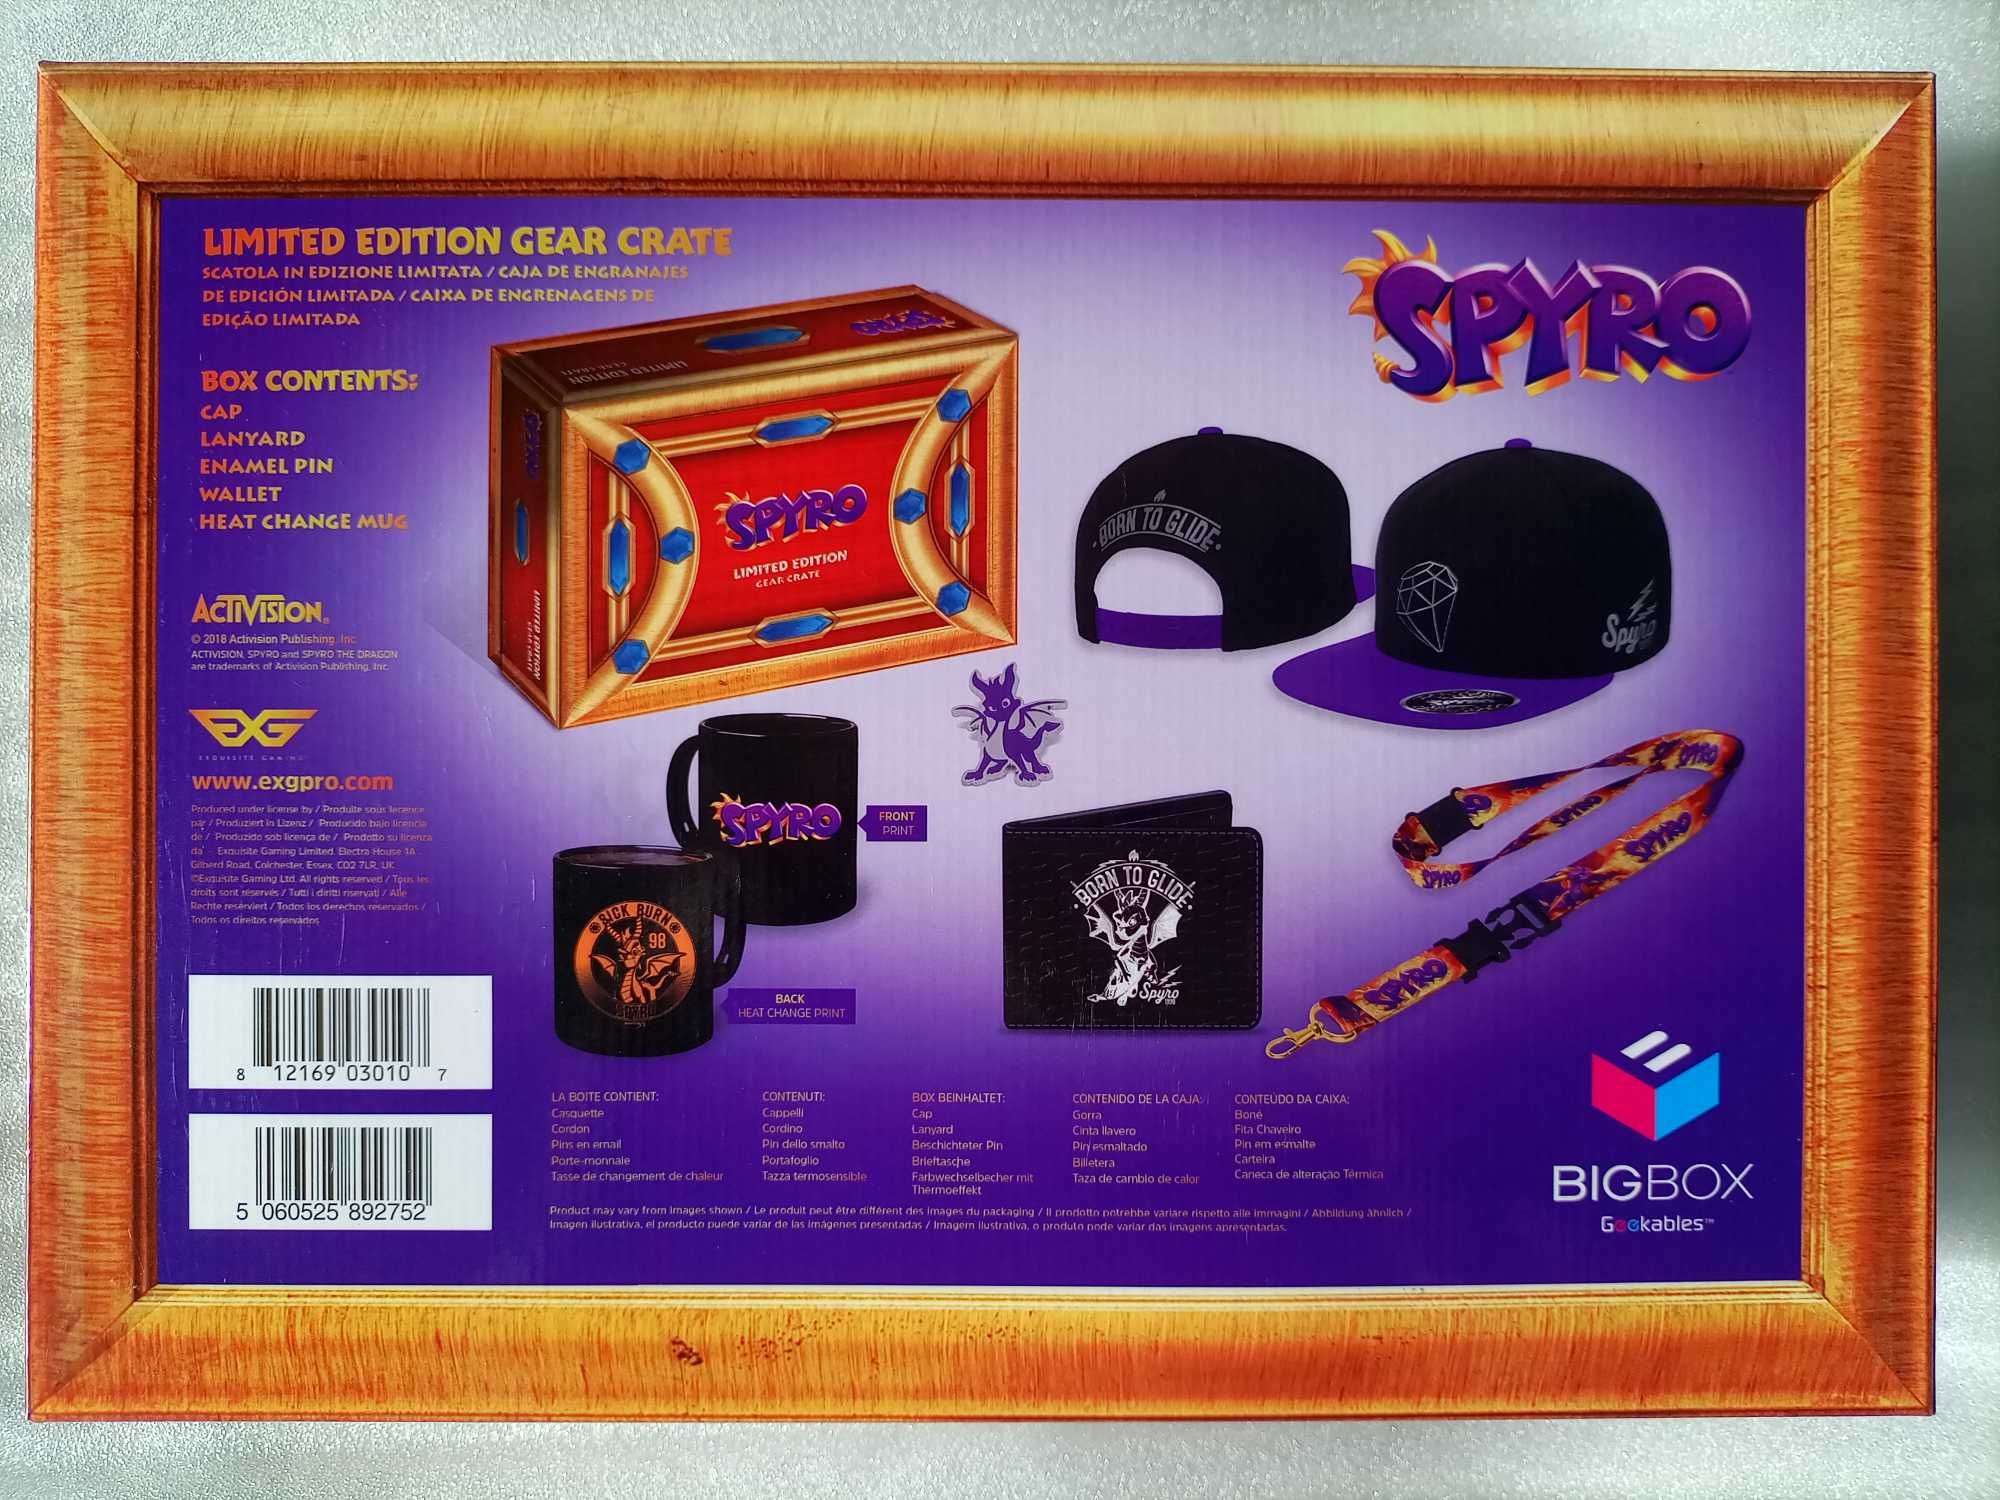 Caixa Spyro nova